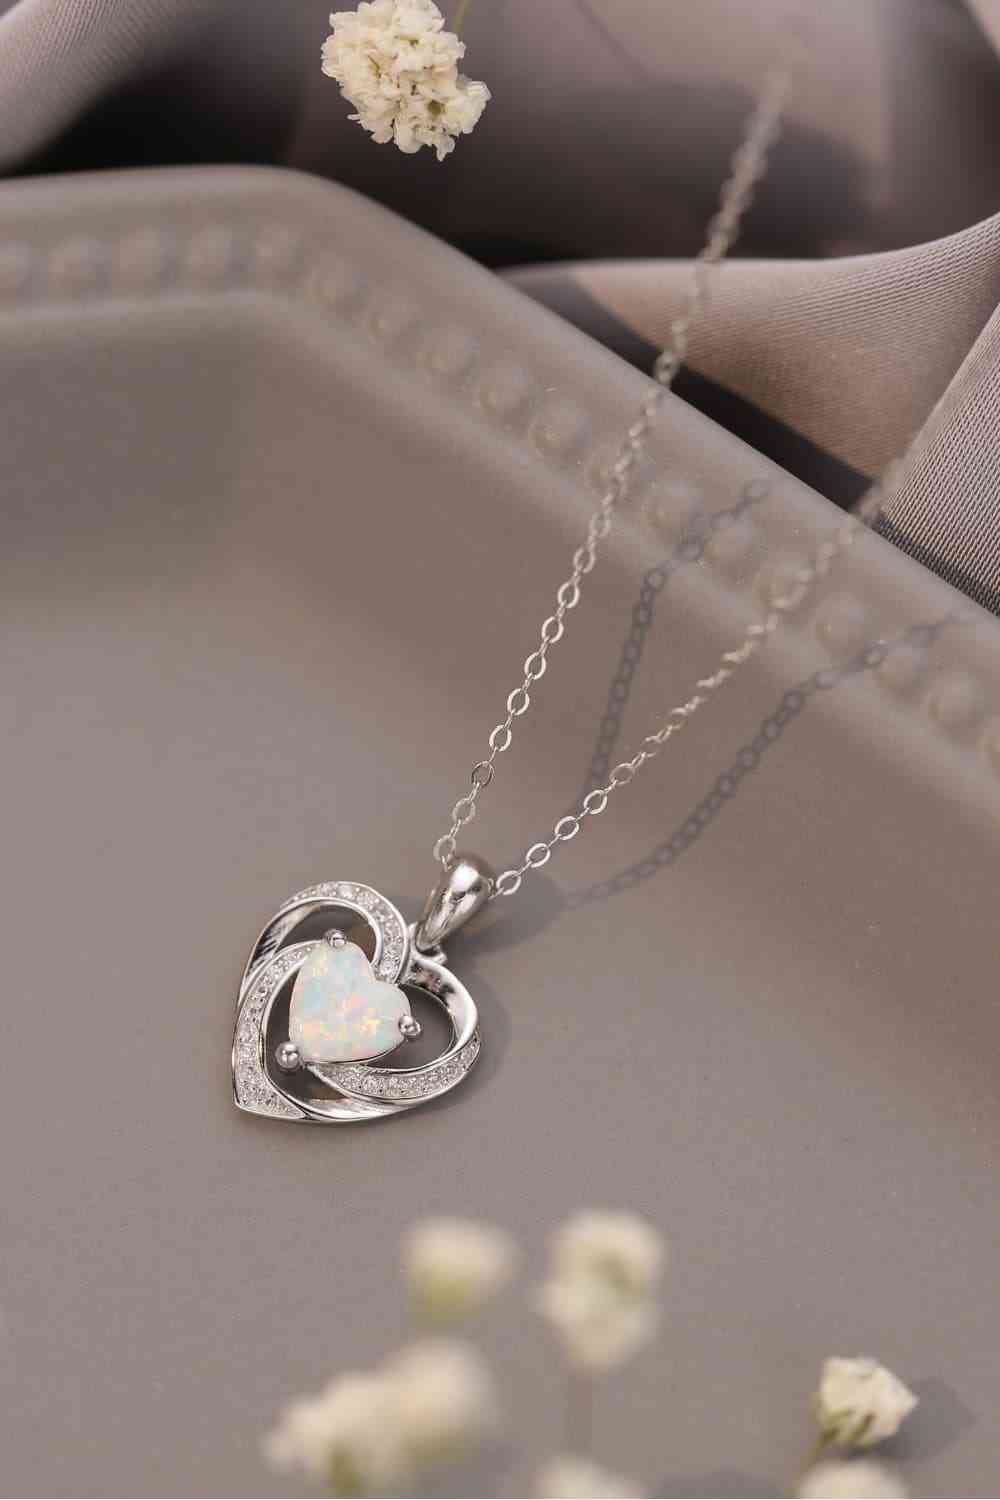 Collier pendentif coeur opale